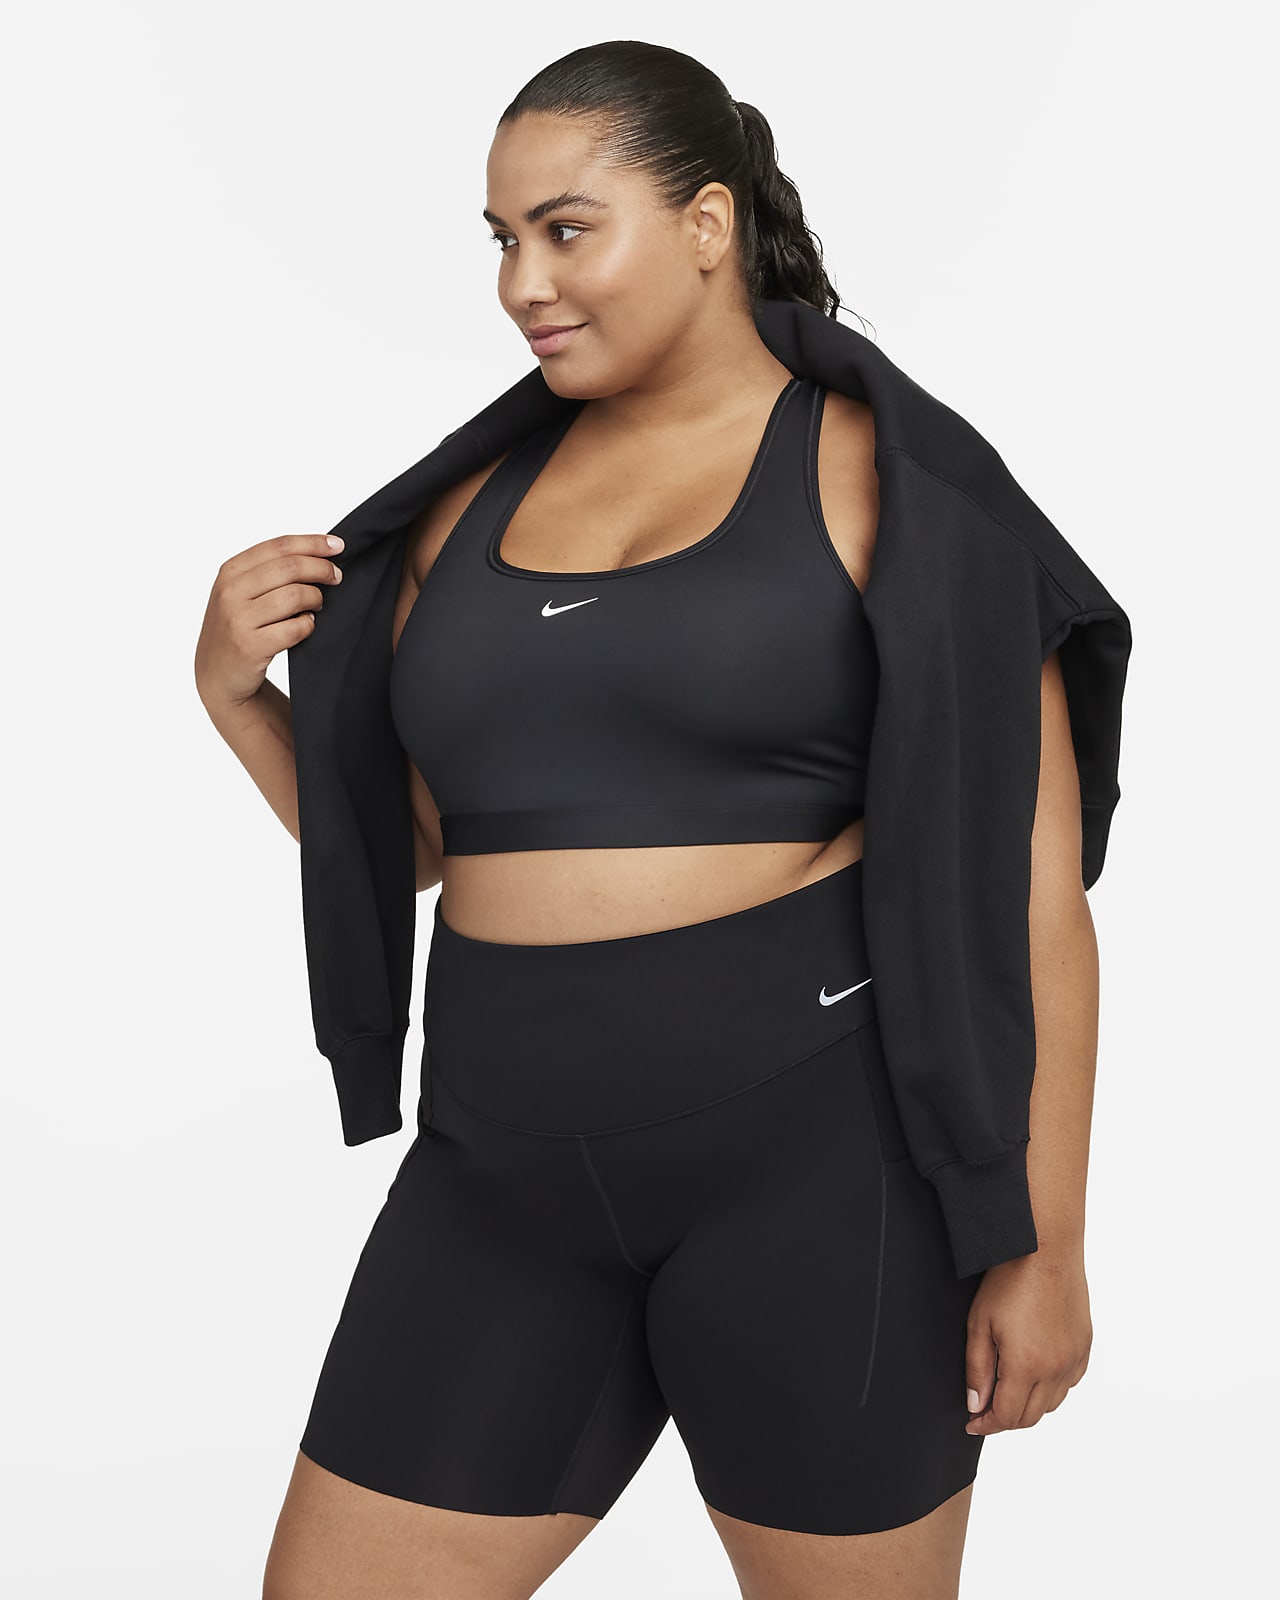 Nike Universa-cykelshorts (20 cm) med medium støtte, høj talje og lommer til kvinder (plus size)